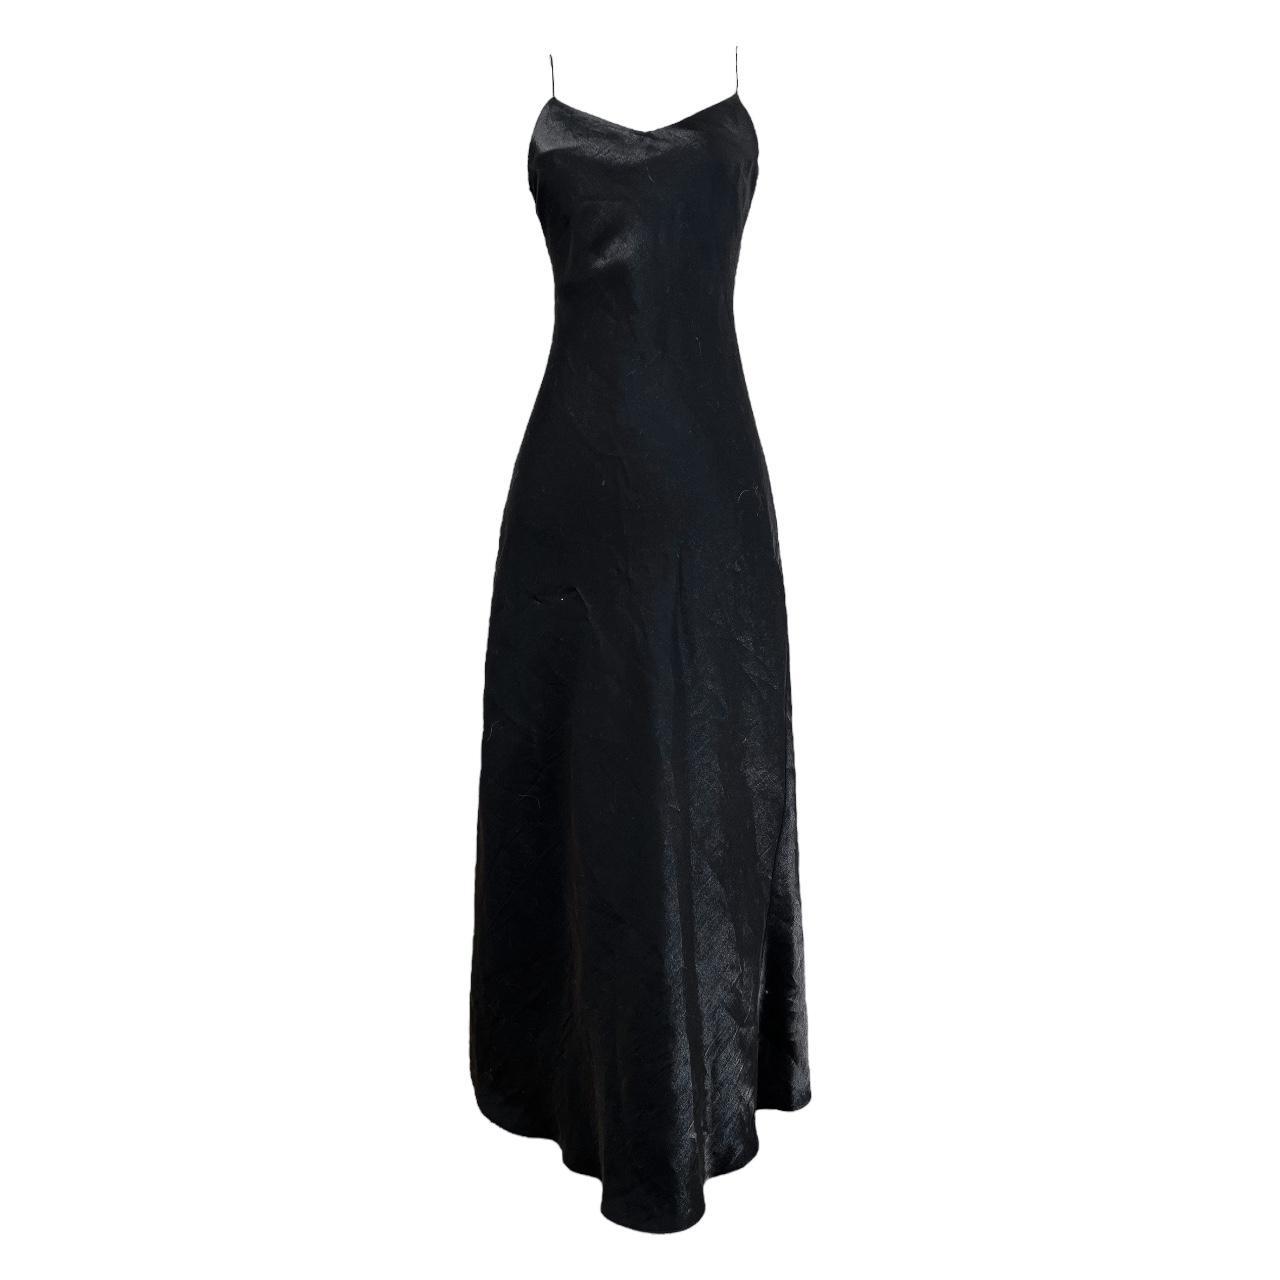 90s Vintage Slip Dress 🦇 ⚔️ shimmery satin fabric,... - Depop